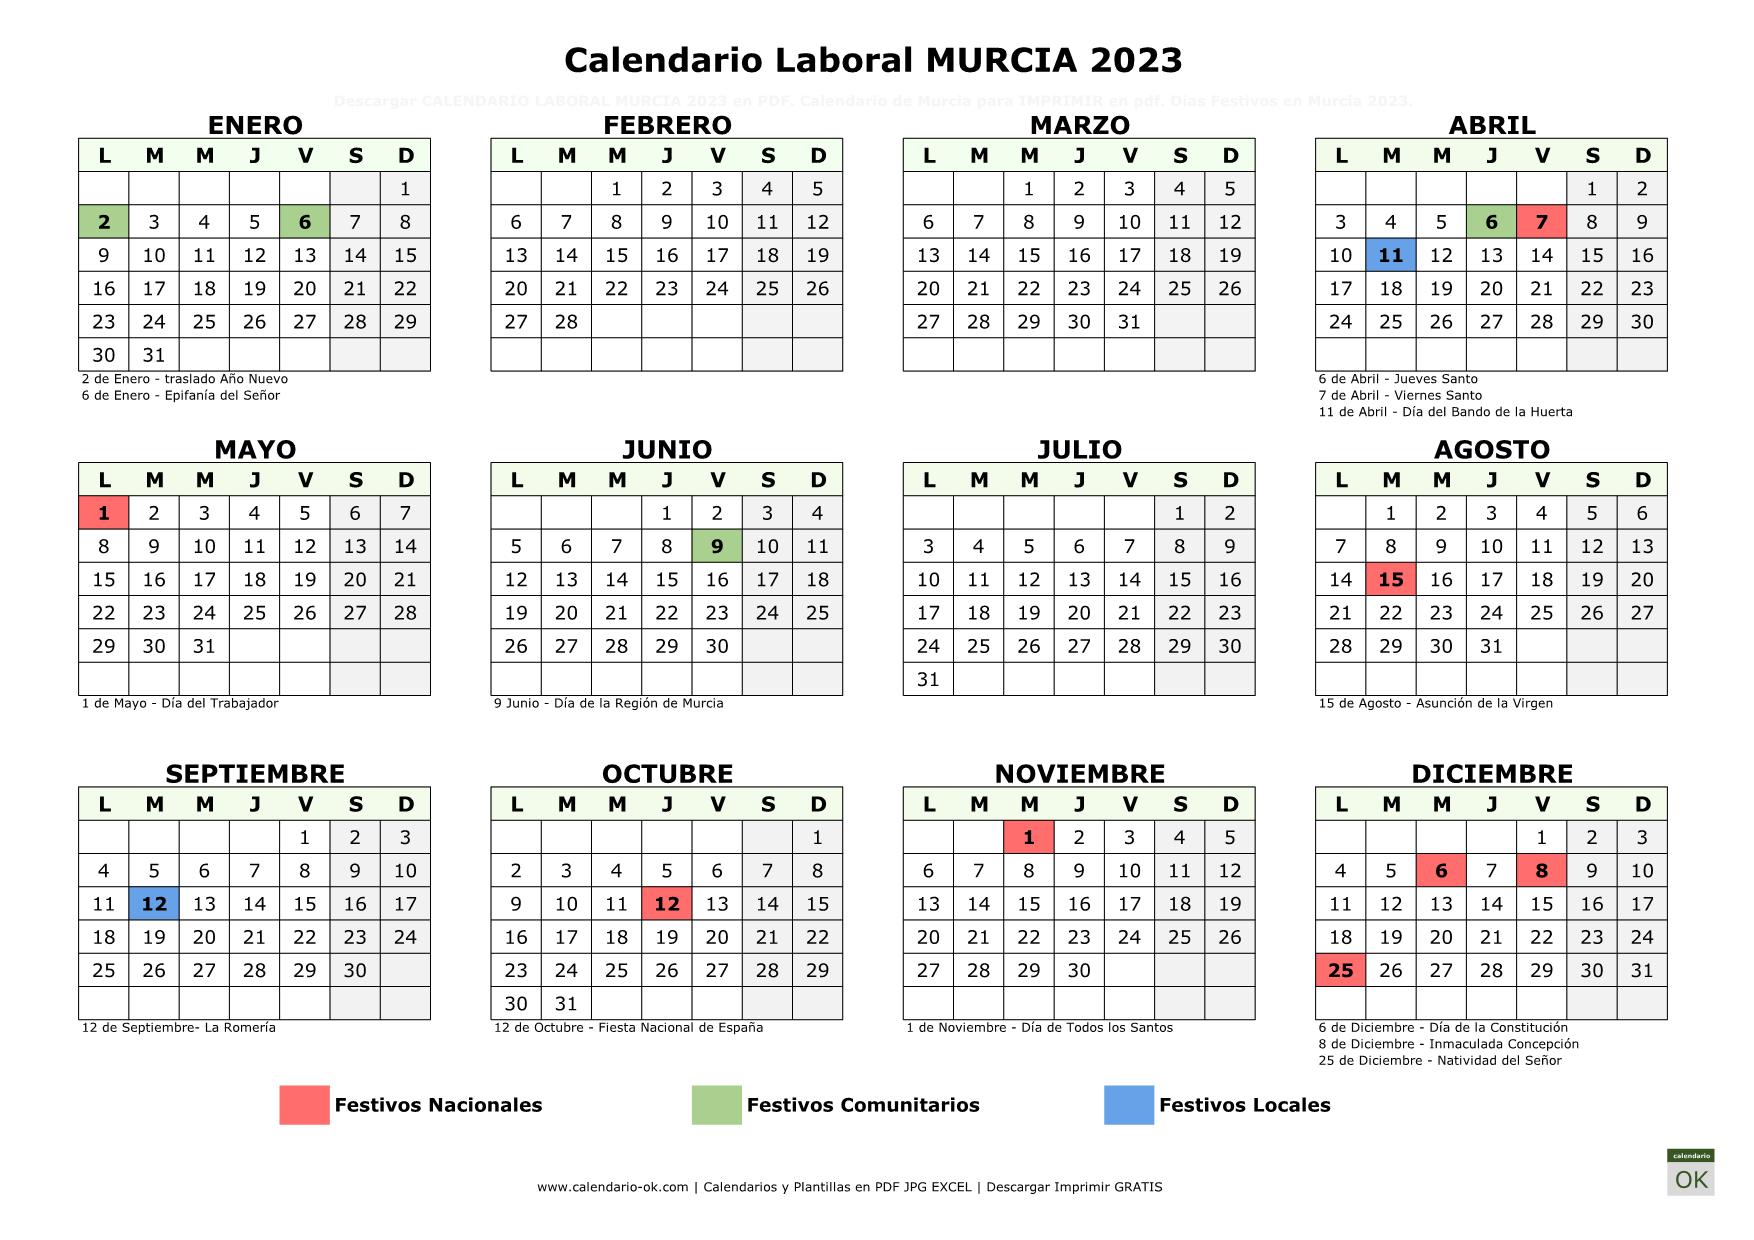 Calendario Laboral MURCIA 2023 horizontal